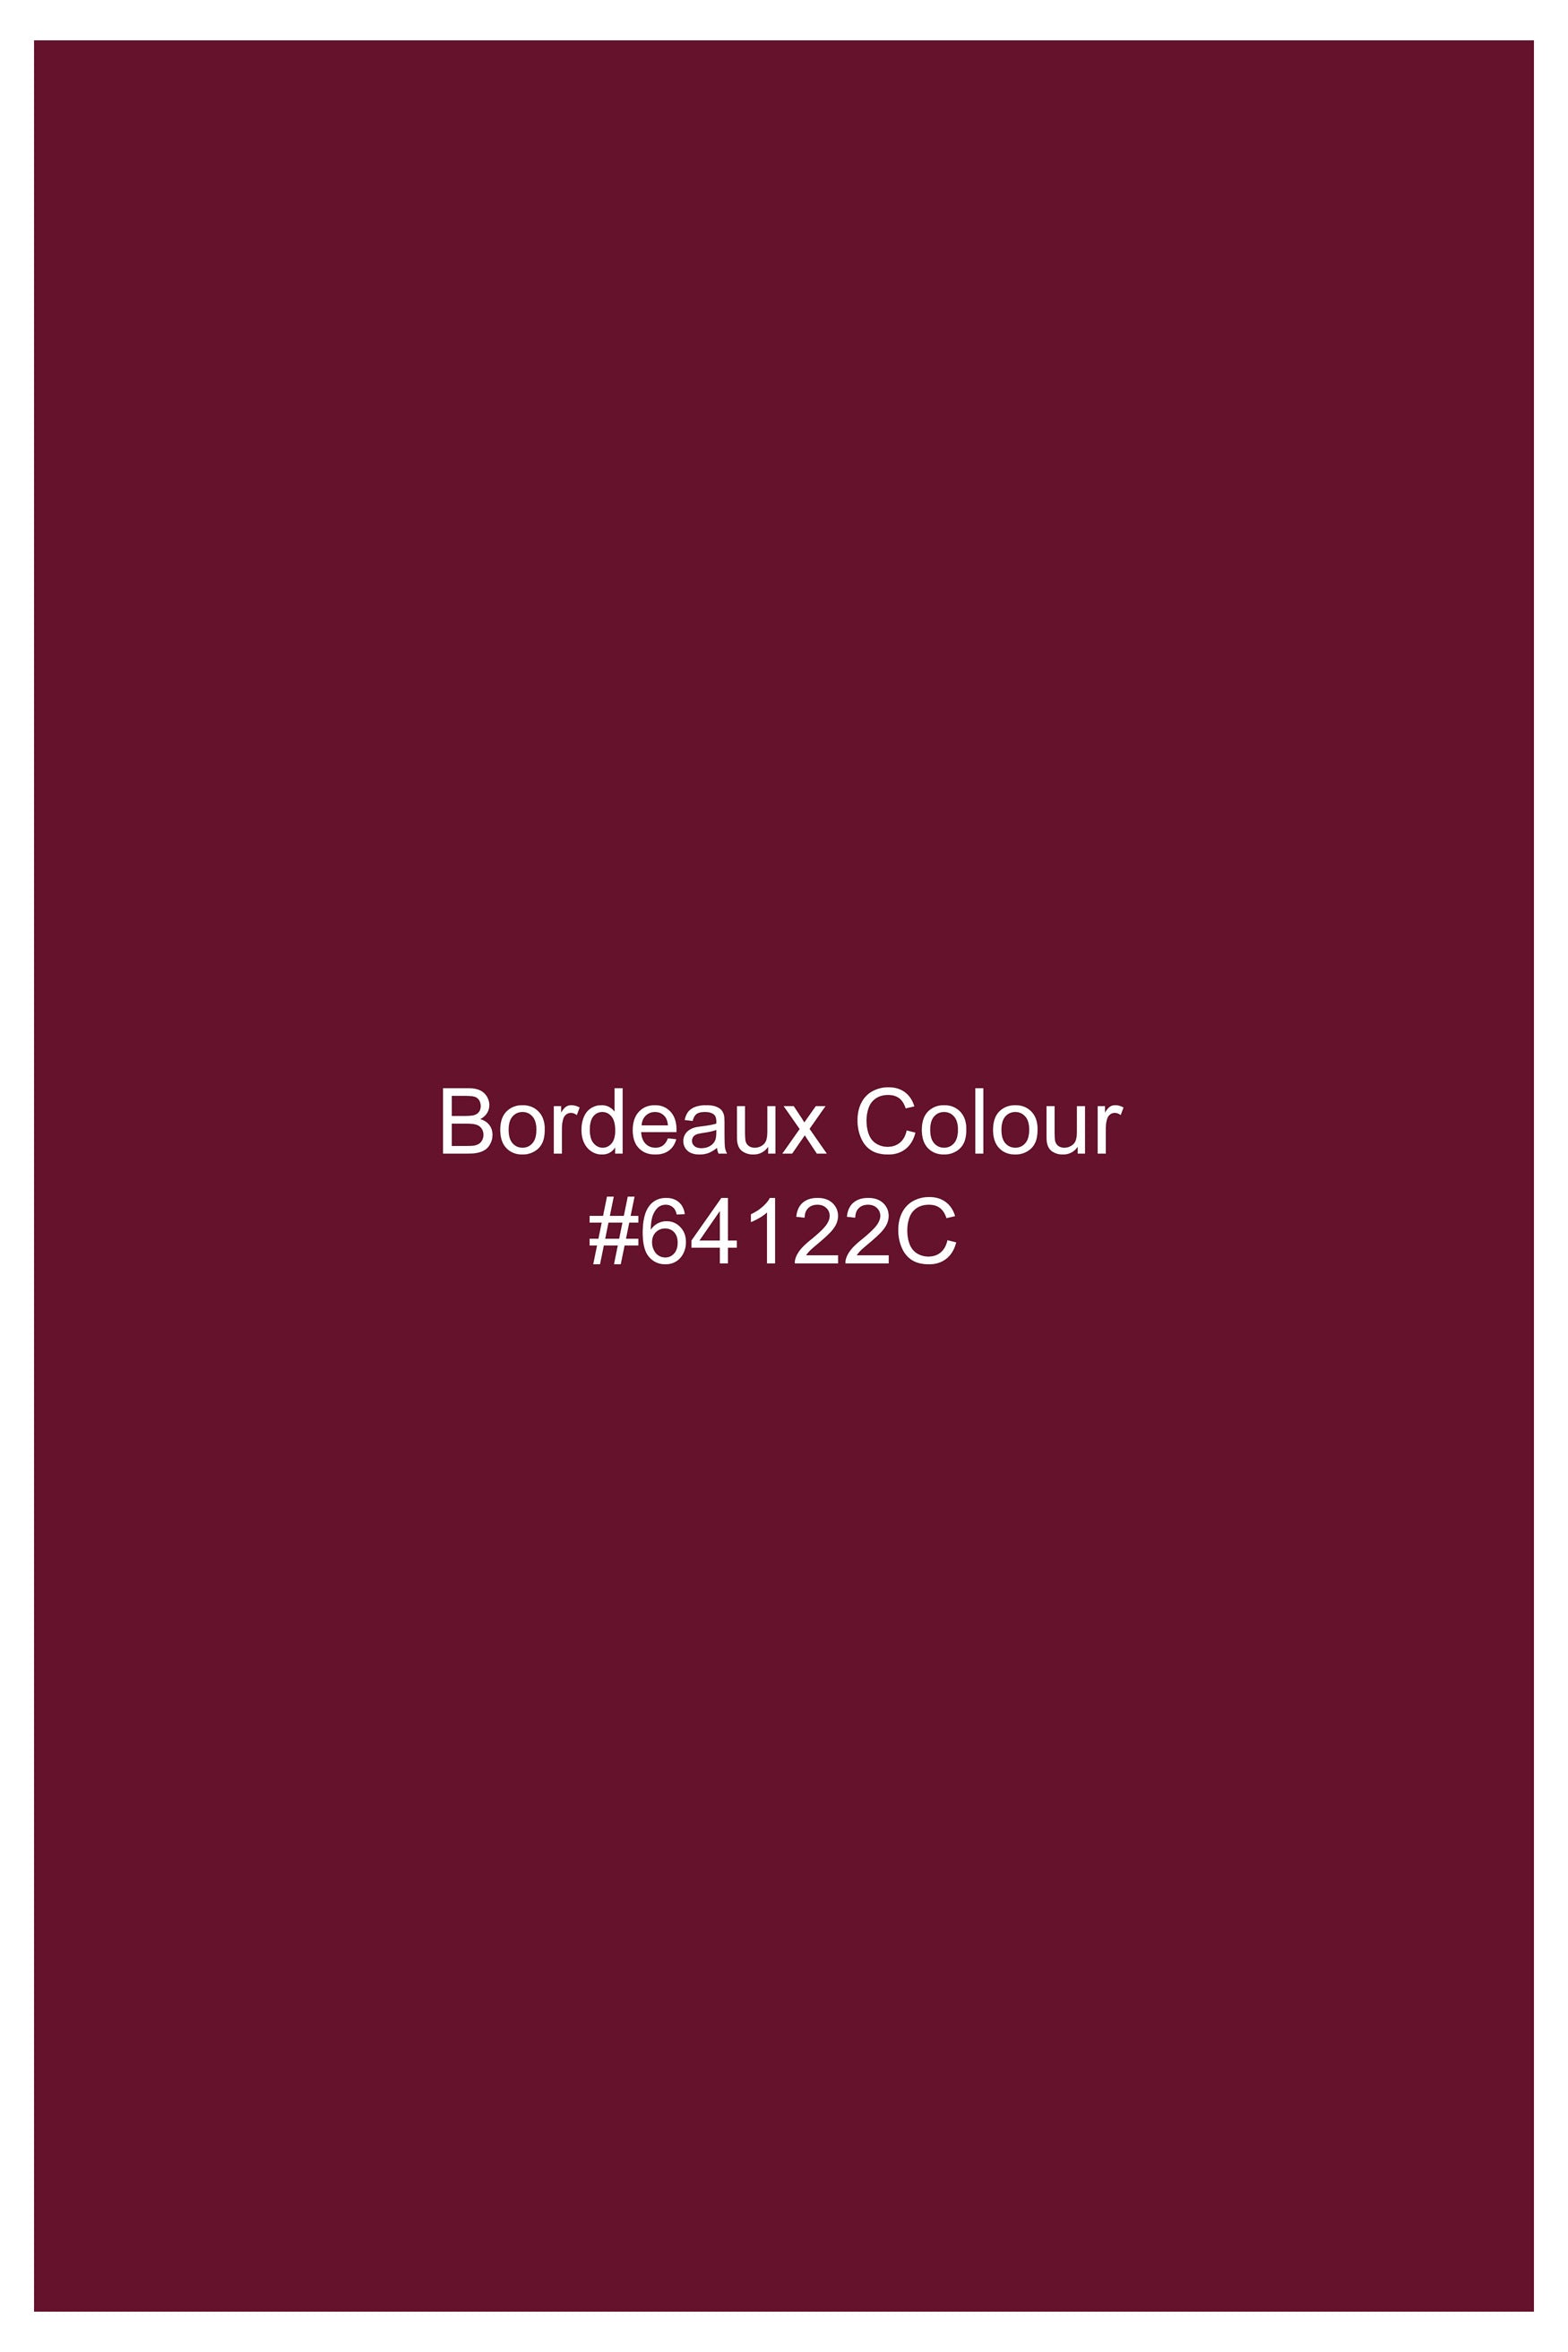 Bordeaux Maroon Premium Cotton Palazzo